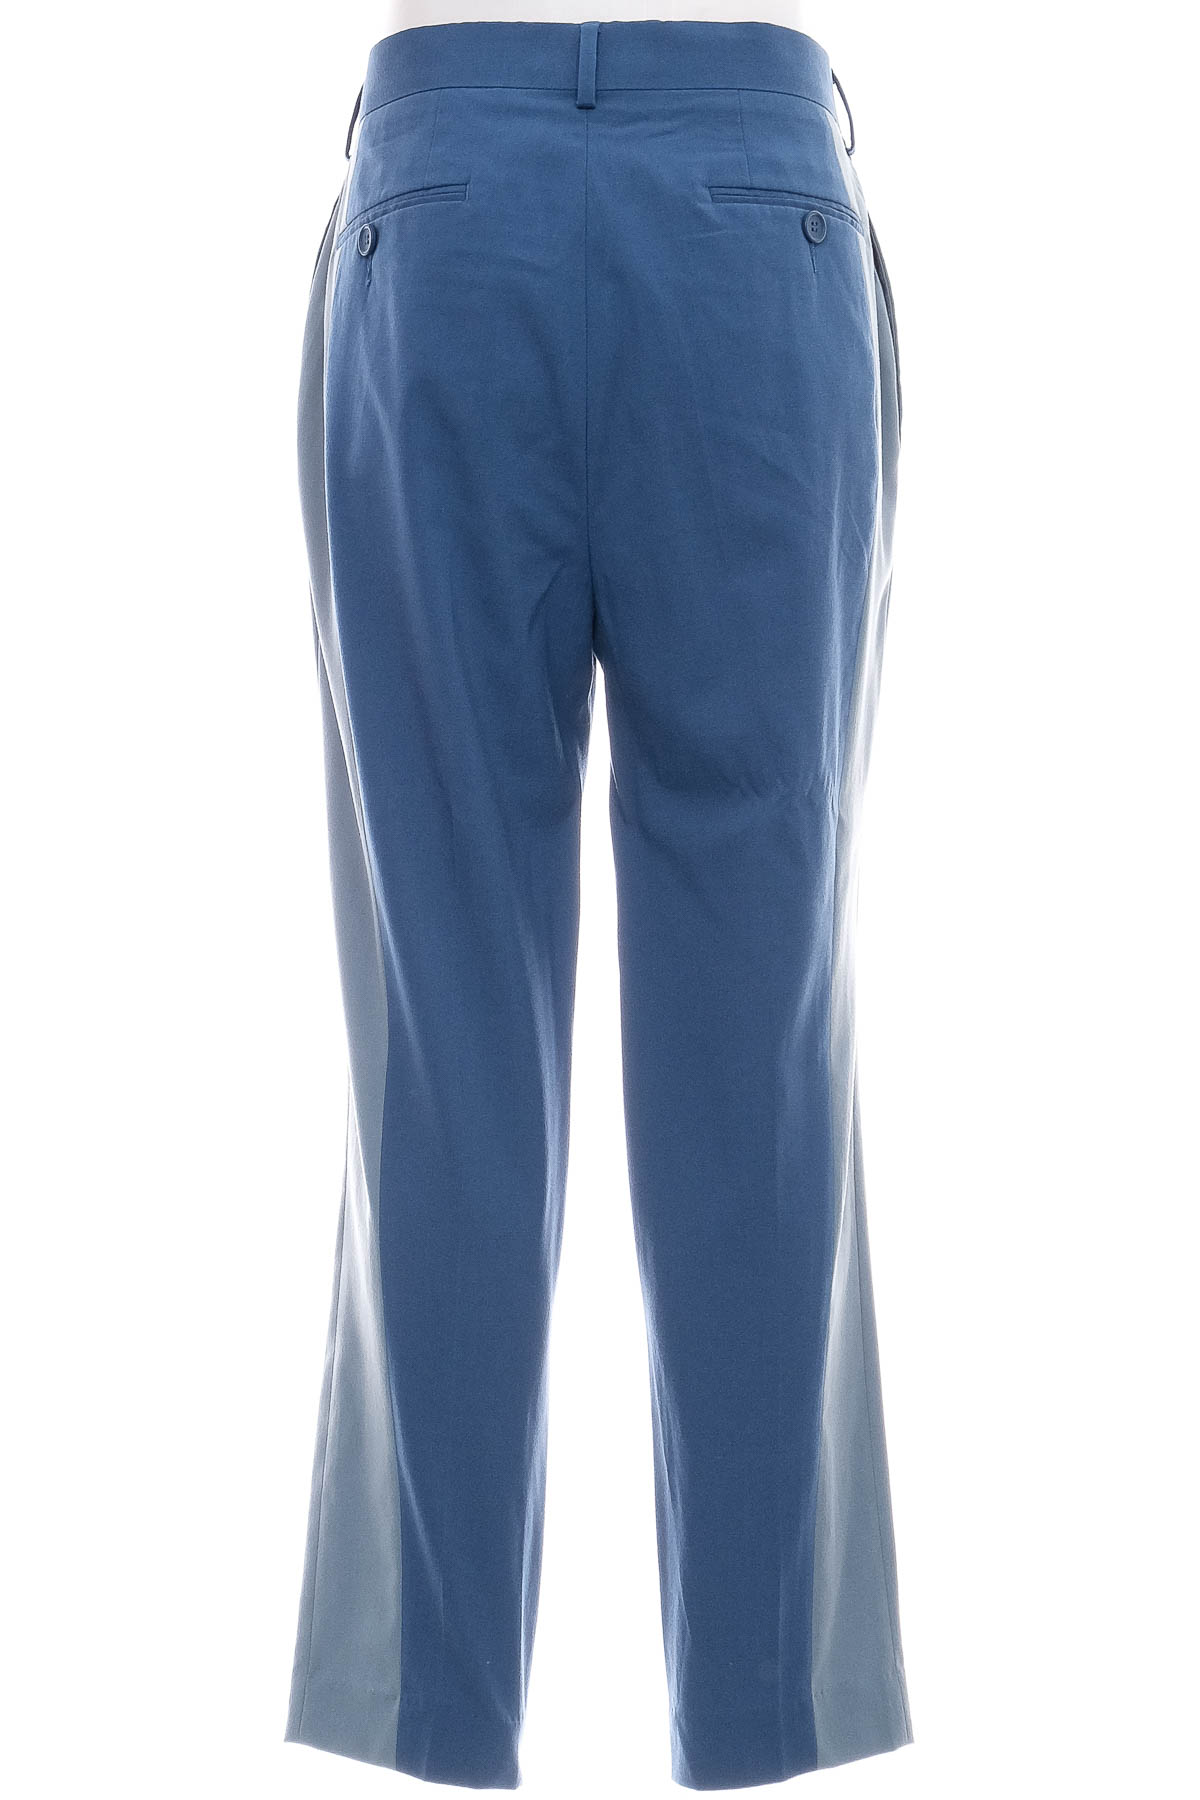 Pantalon pentru bărbați - Asos - 1